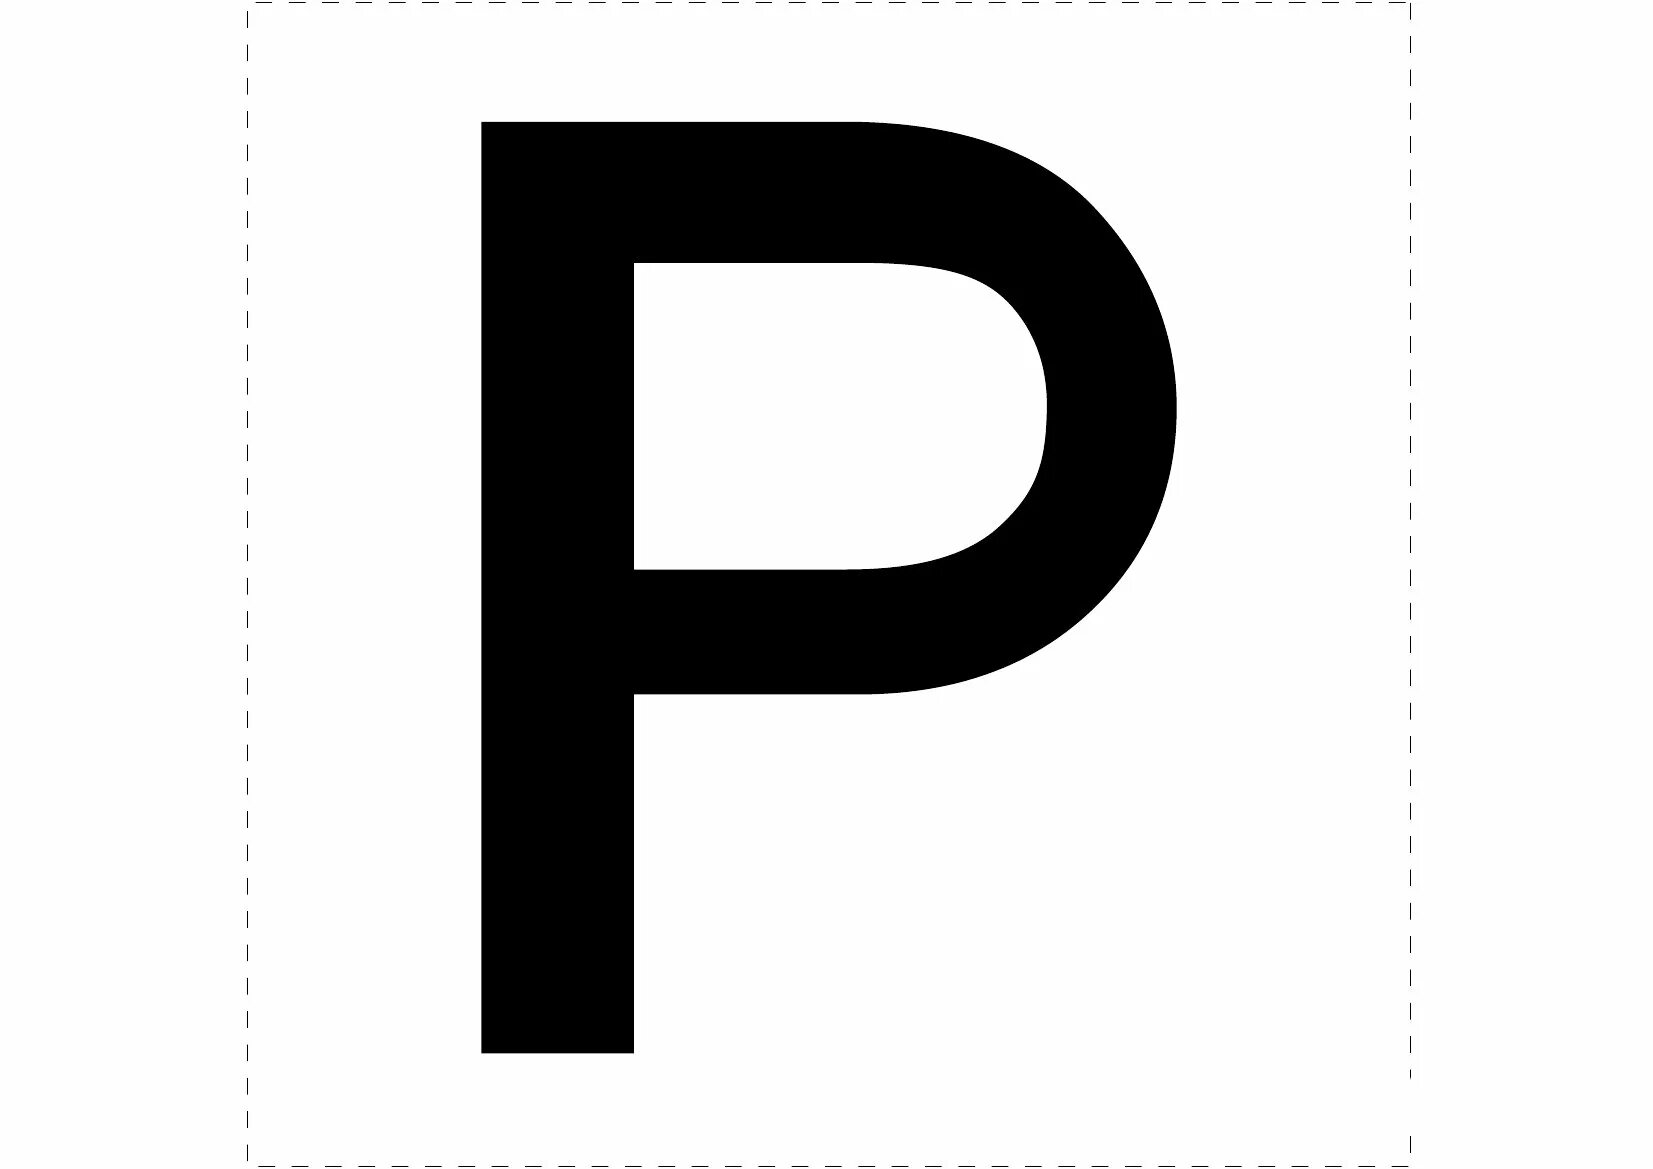 P p p po 0. Буква р. Буквы алфавита для распечатки черные. Буква р без фона. Буква р на весь лист.